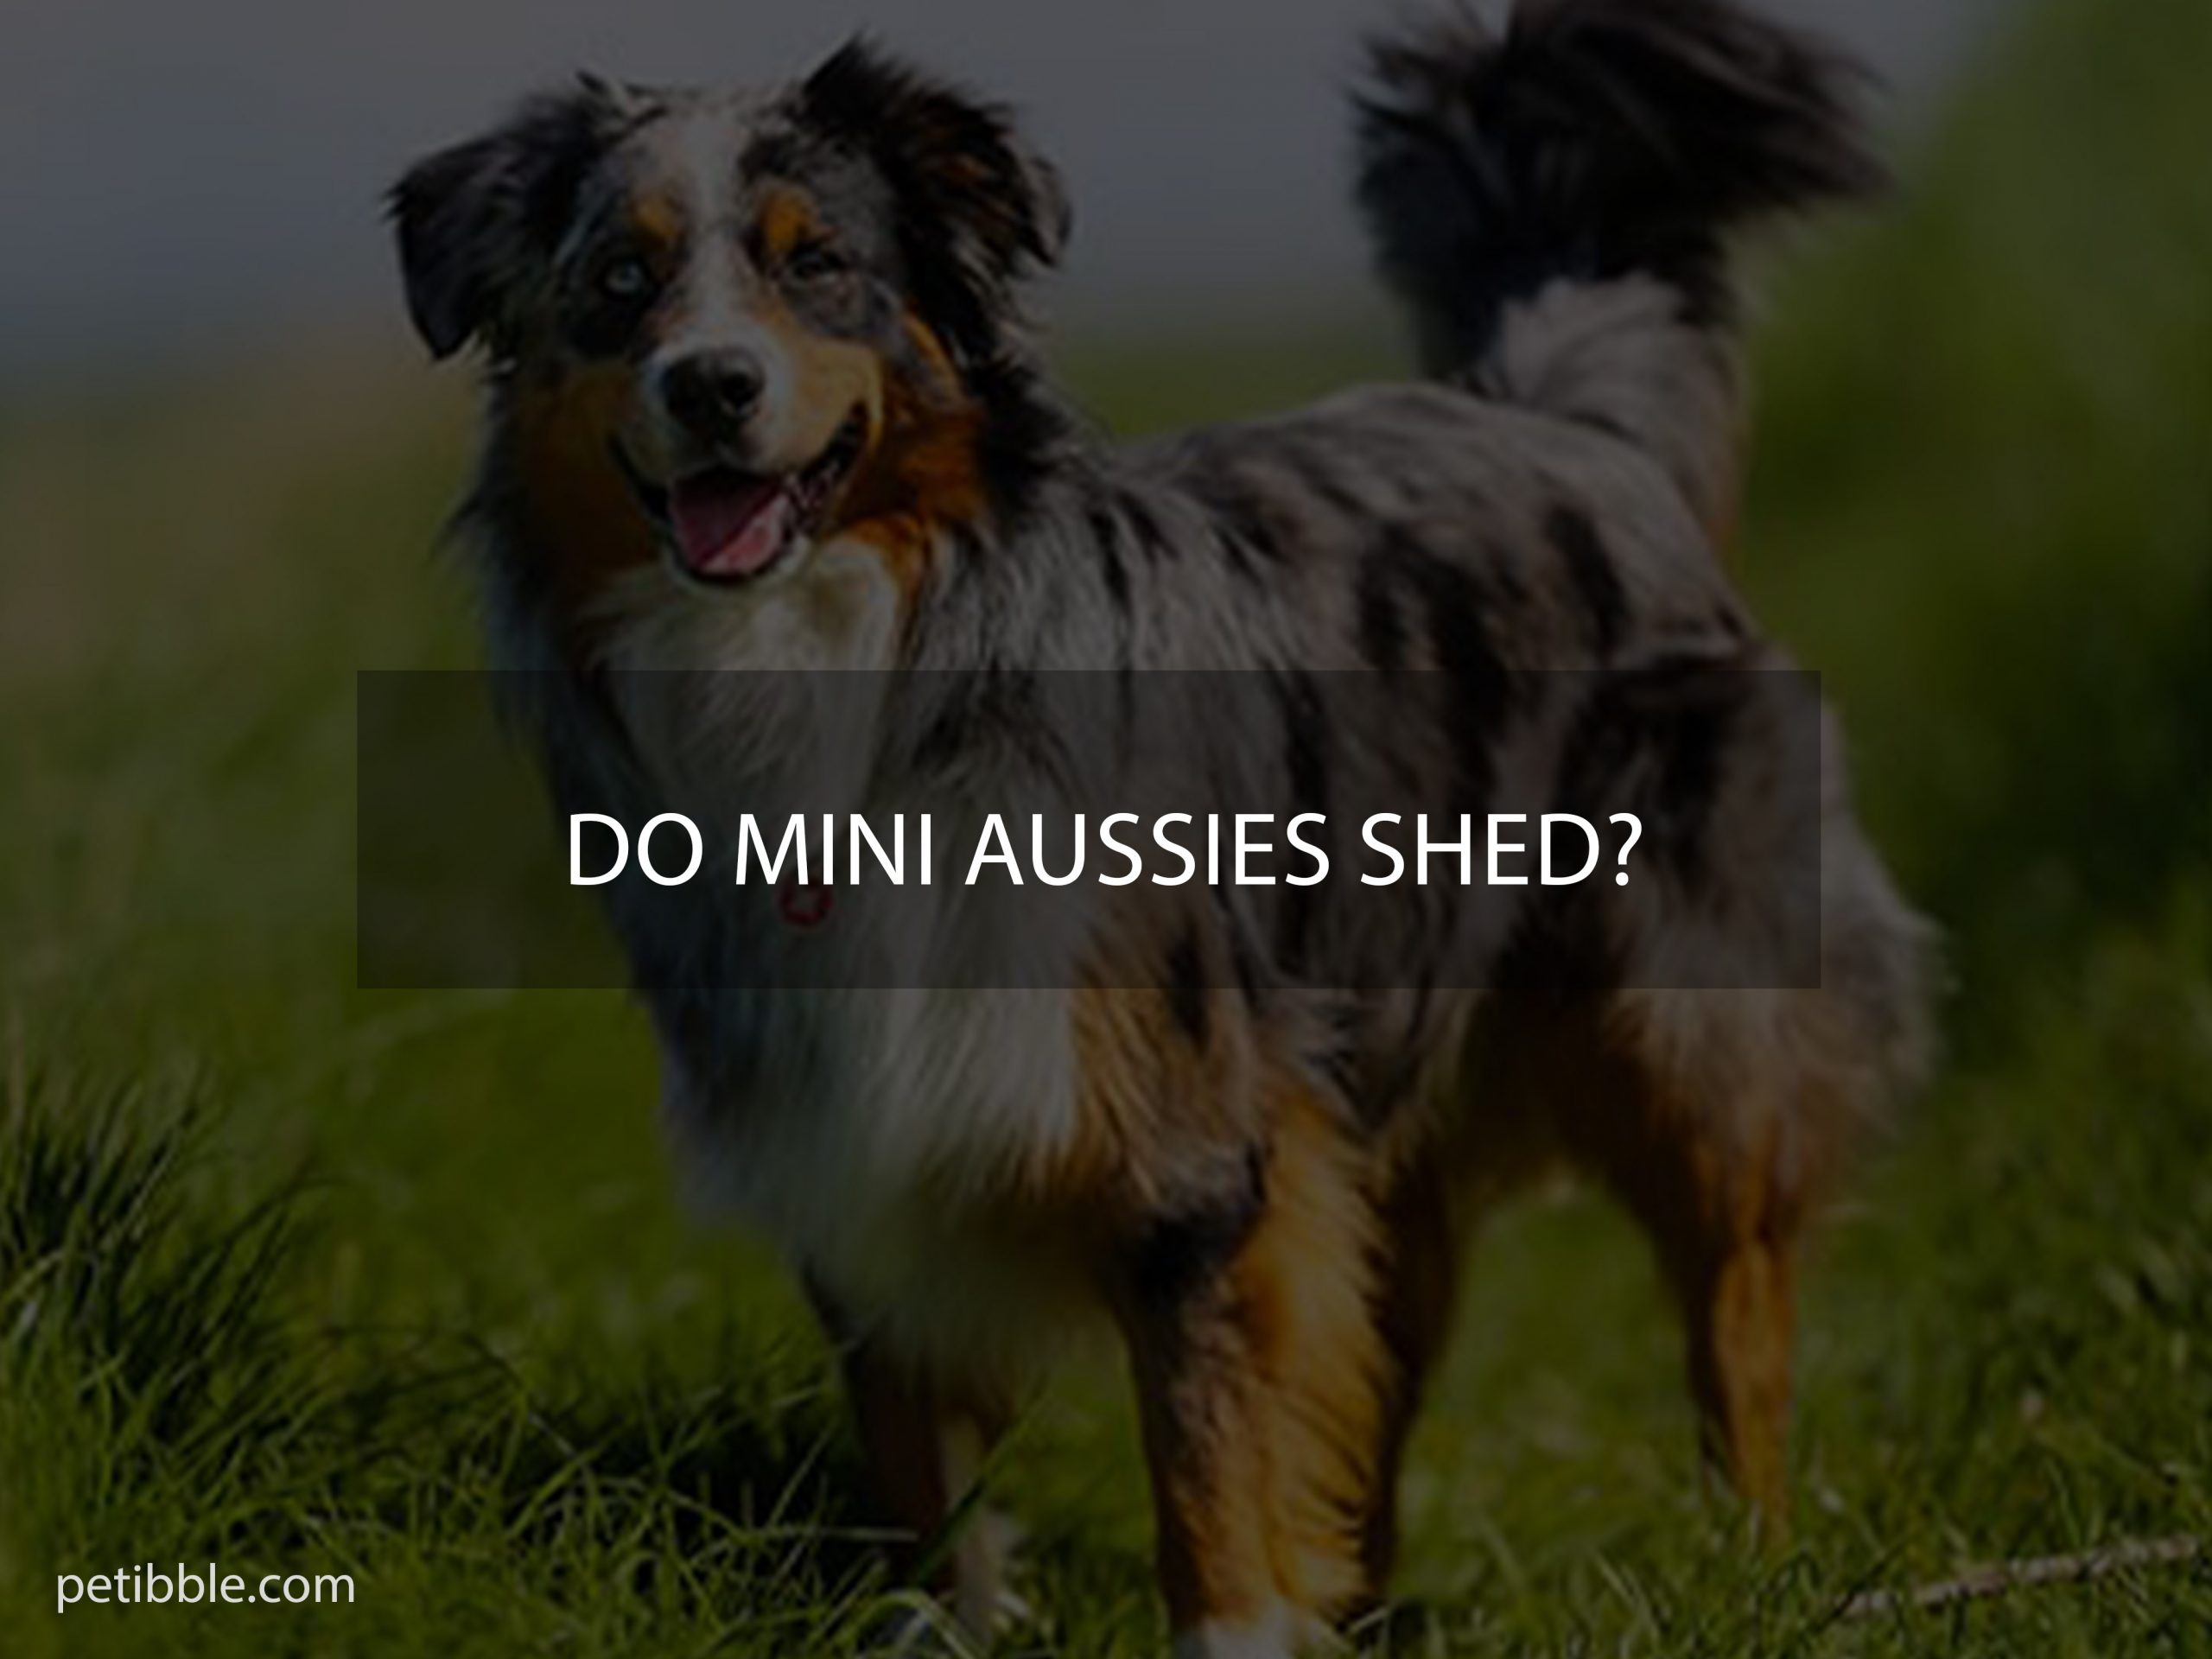 Do Mini Aussies shed?